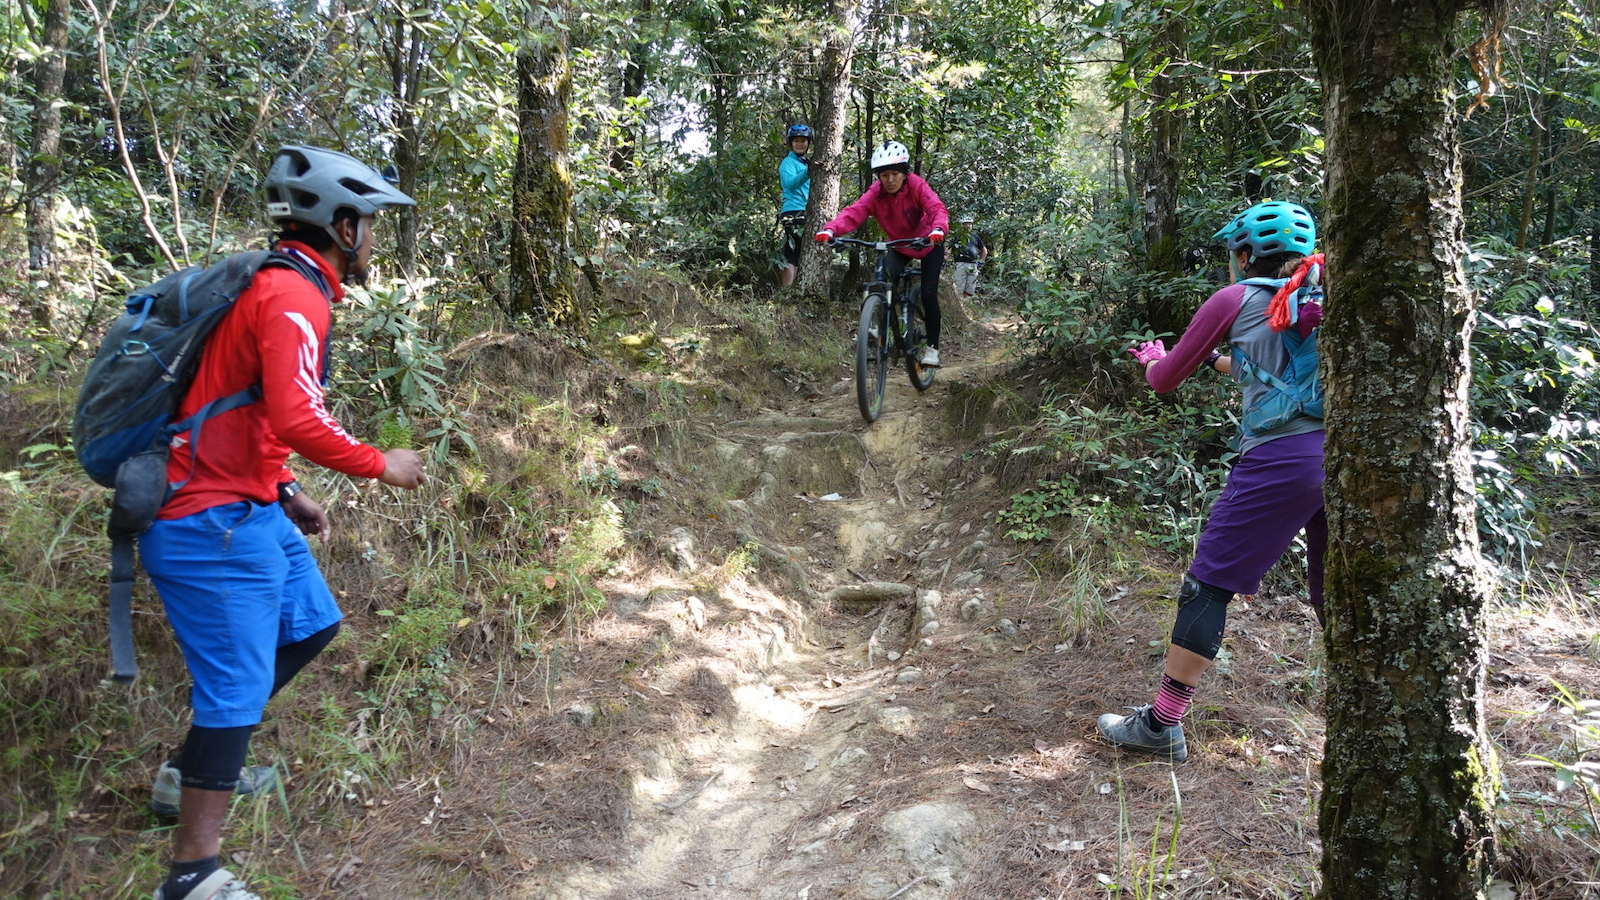 Nepali women practicing skills riding a technical drop at Nagarkot.